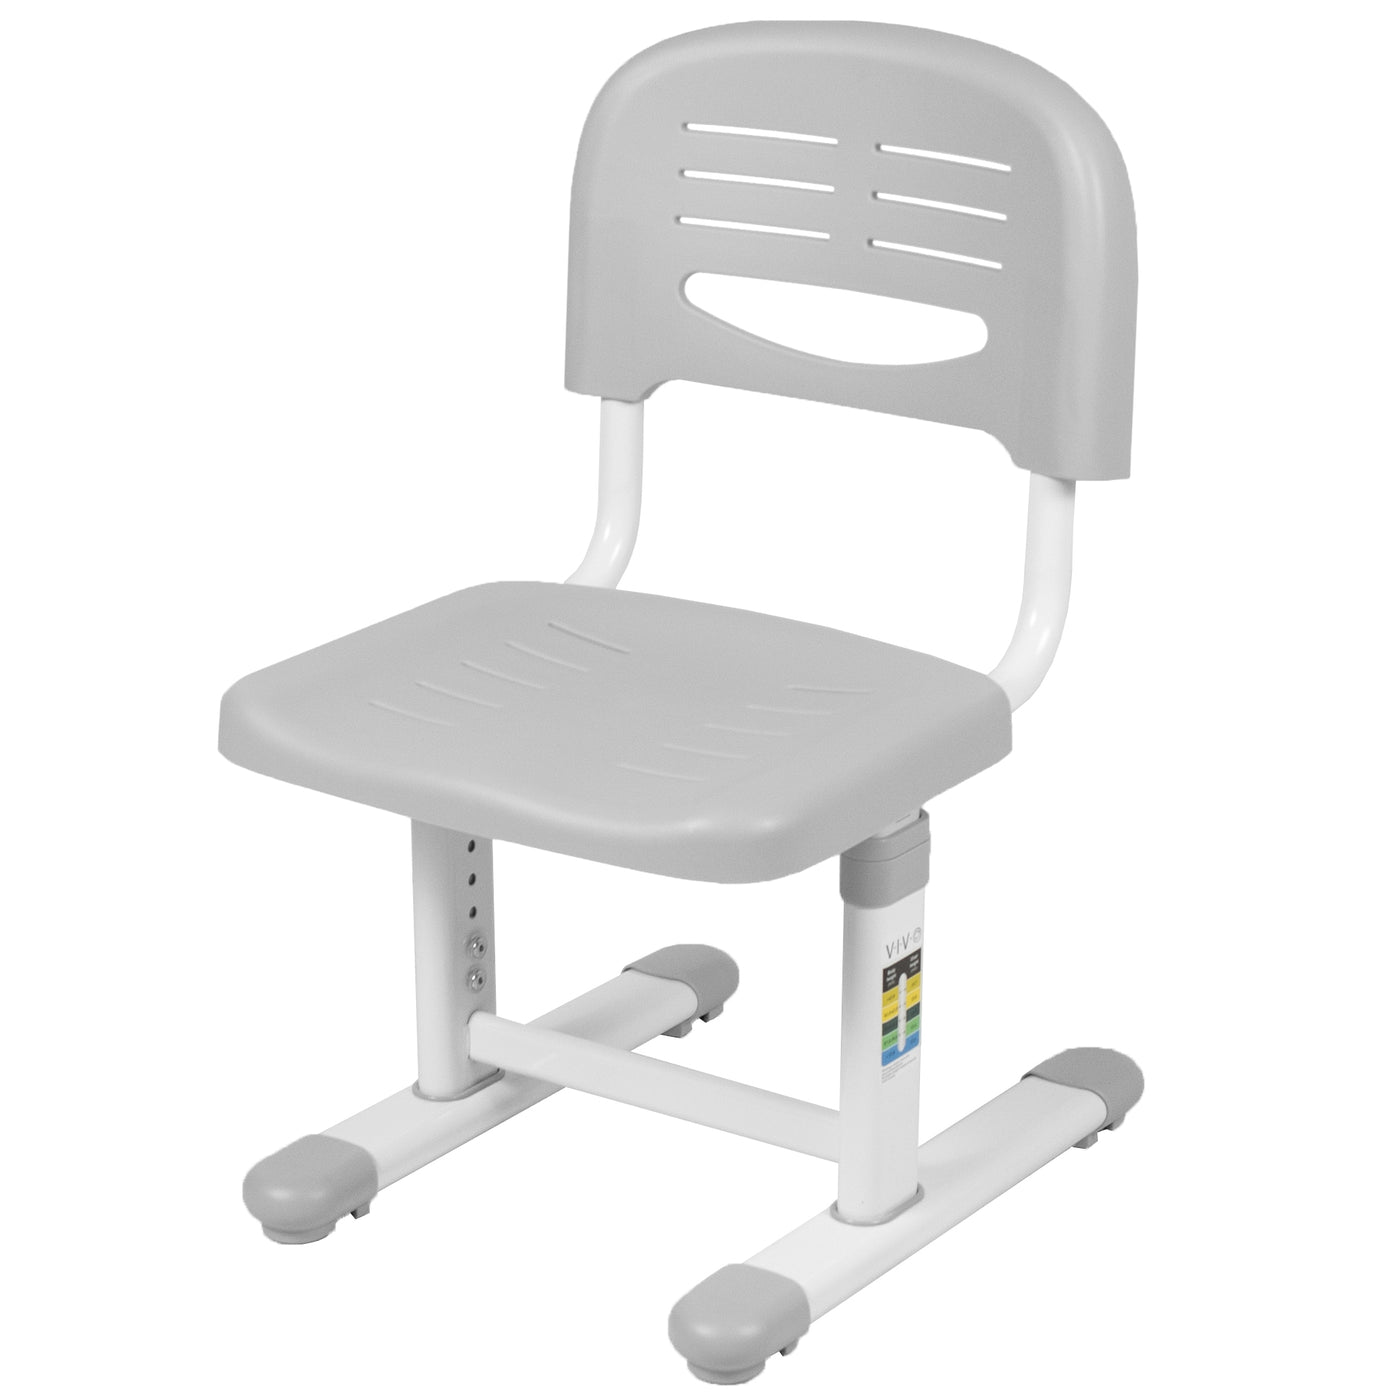 Kids’ Height Adjustable Ergonomic Chair